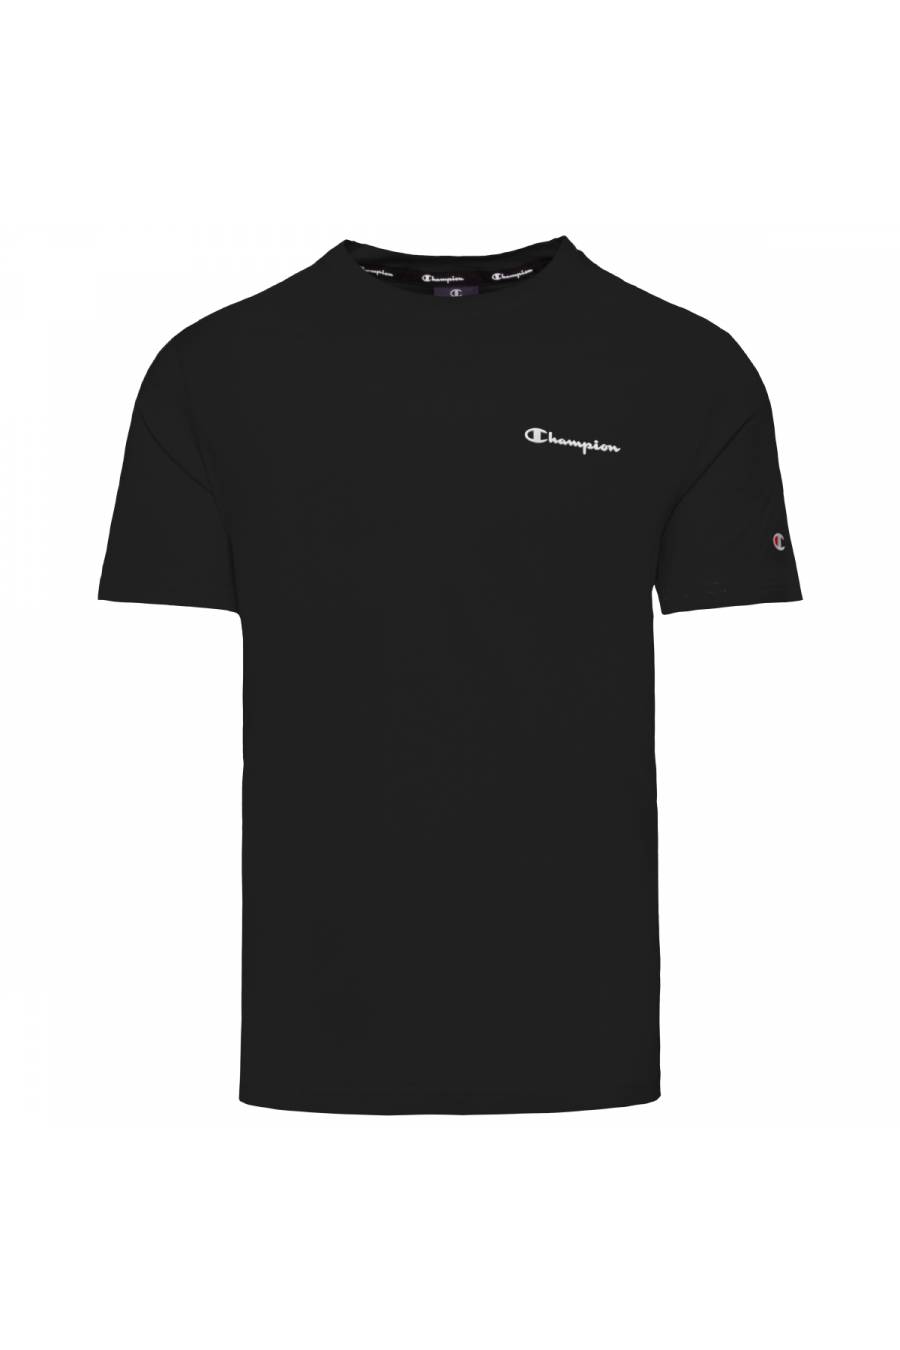 Camiseta Champion Crewneck T-shirt - Msdsport by Masdeporte